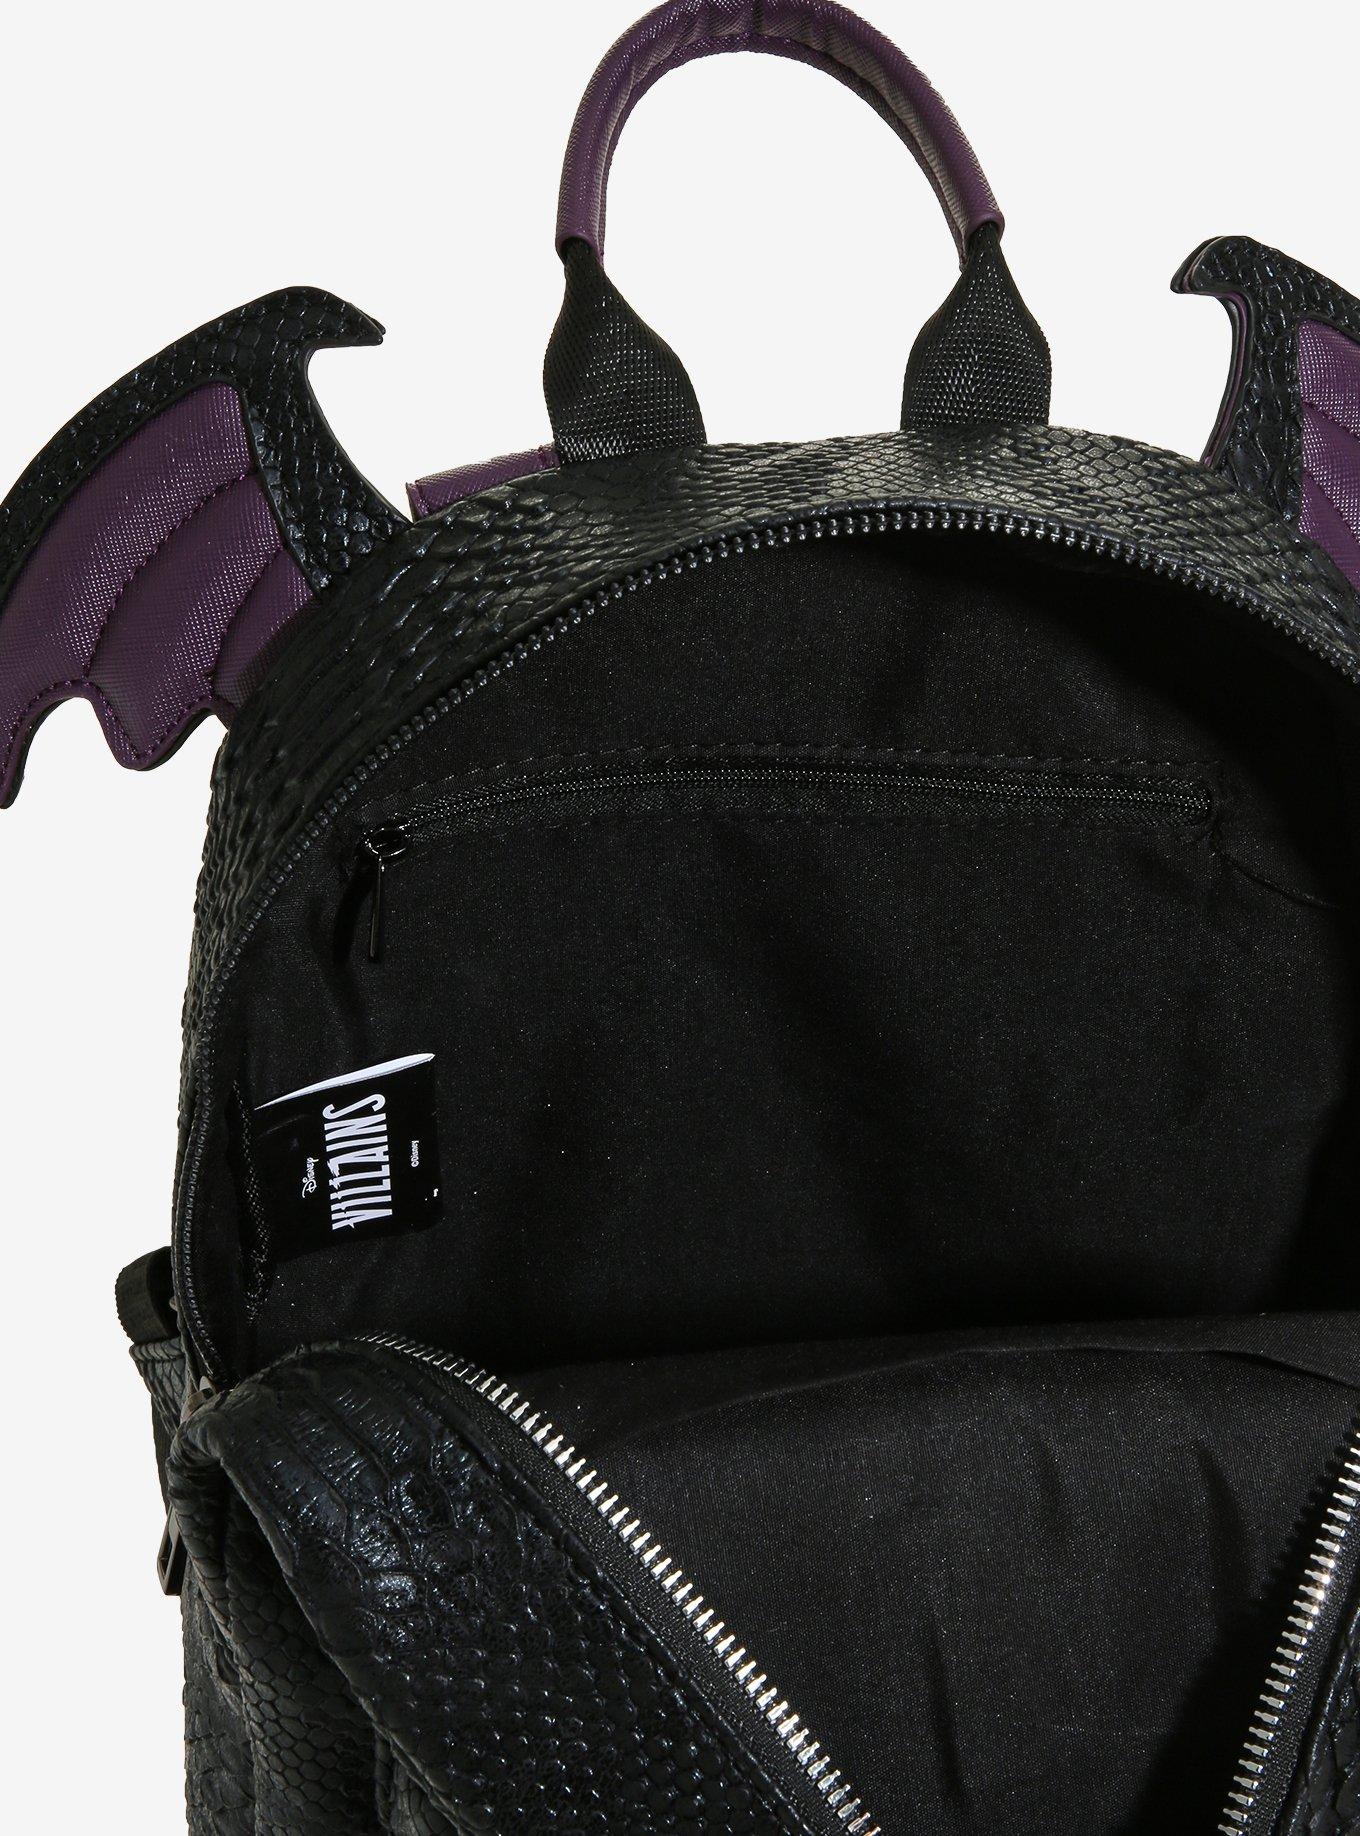 Maleficent Dragon Disney backpack – Cinretailonline